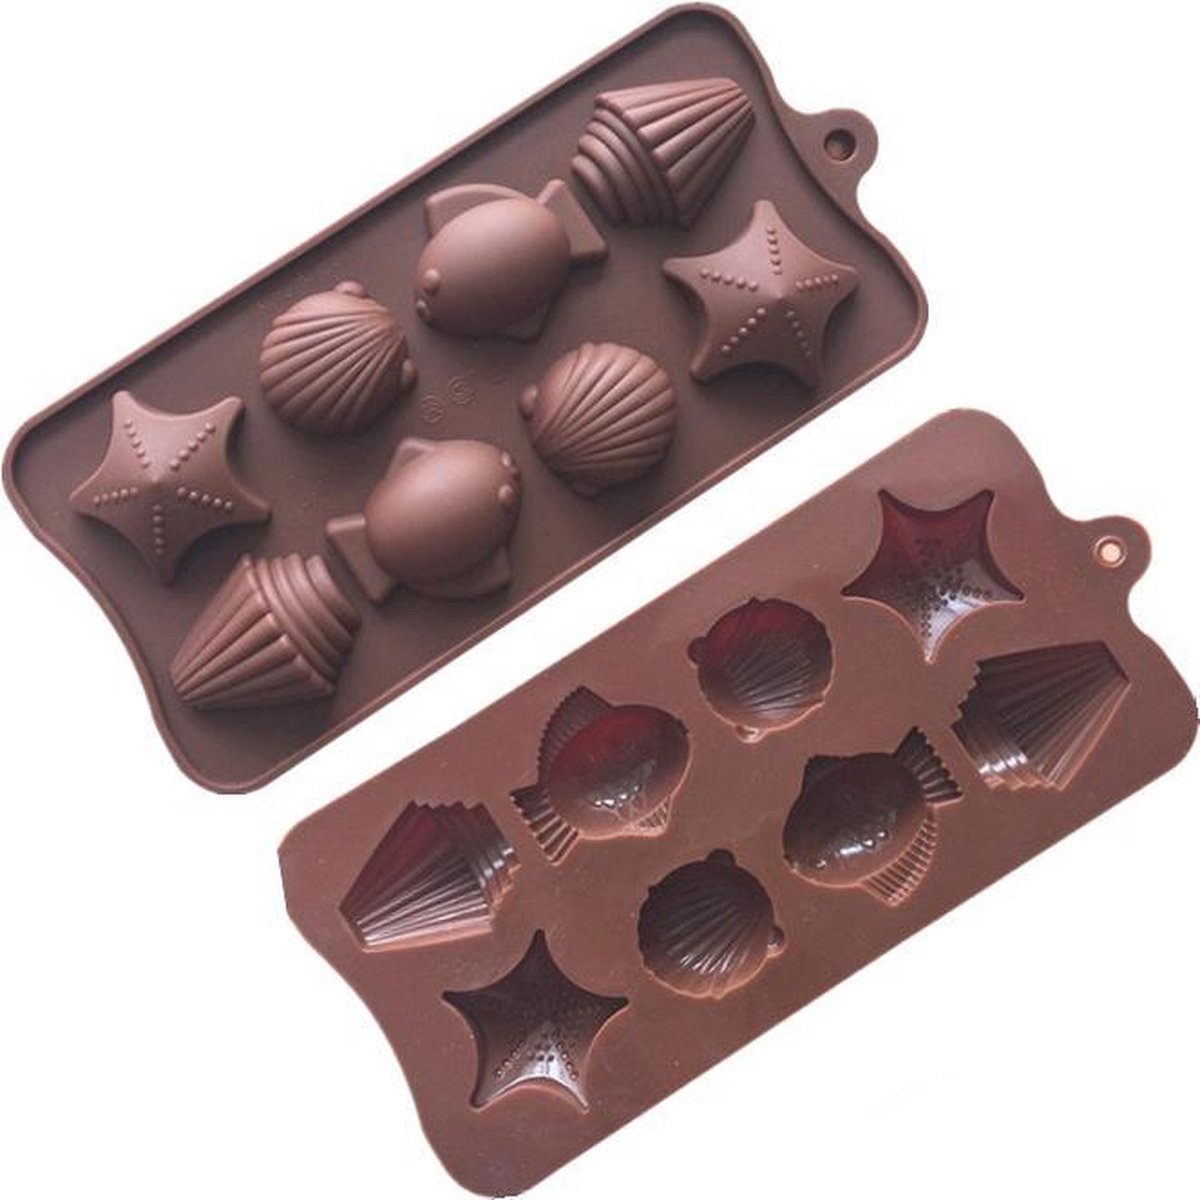 ProductGoods - Siliconen Bakvorm - Bonbonvorm - Chocoladevorm - 8 stuks Zeedieren - Bakvormen